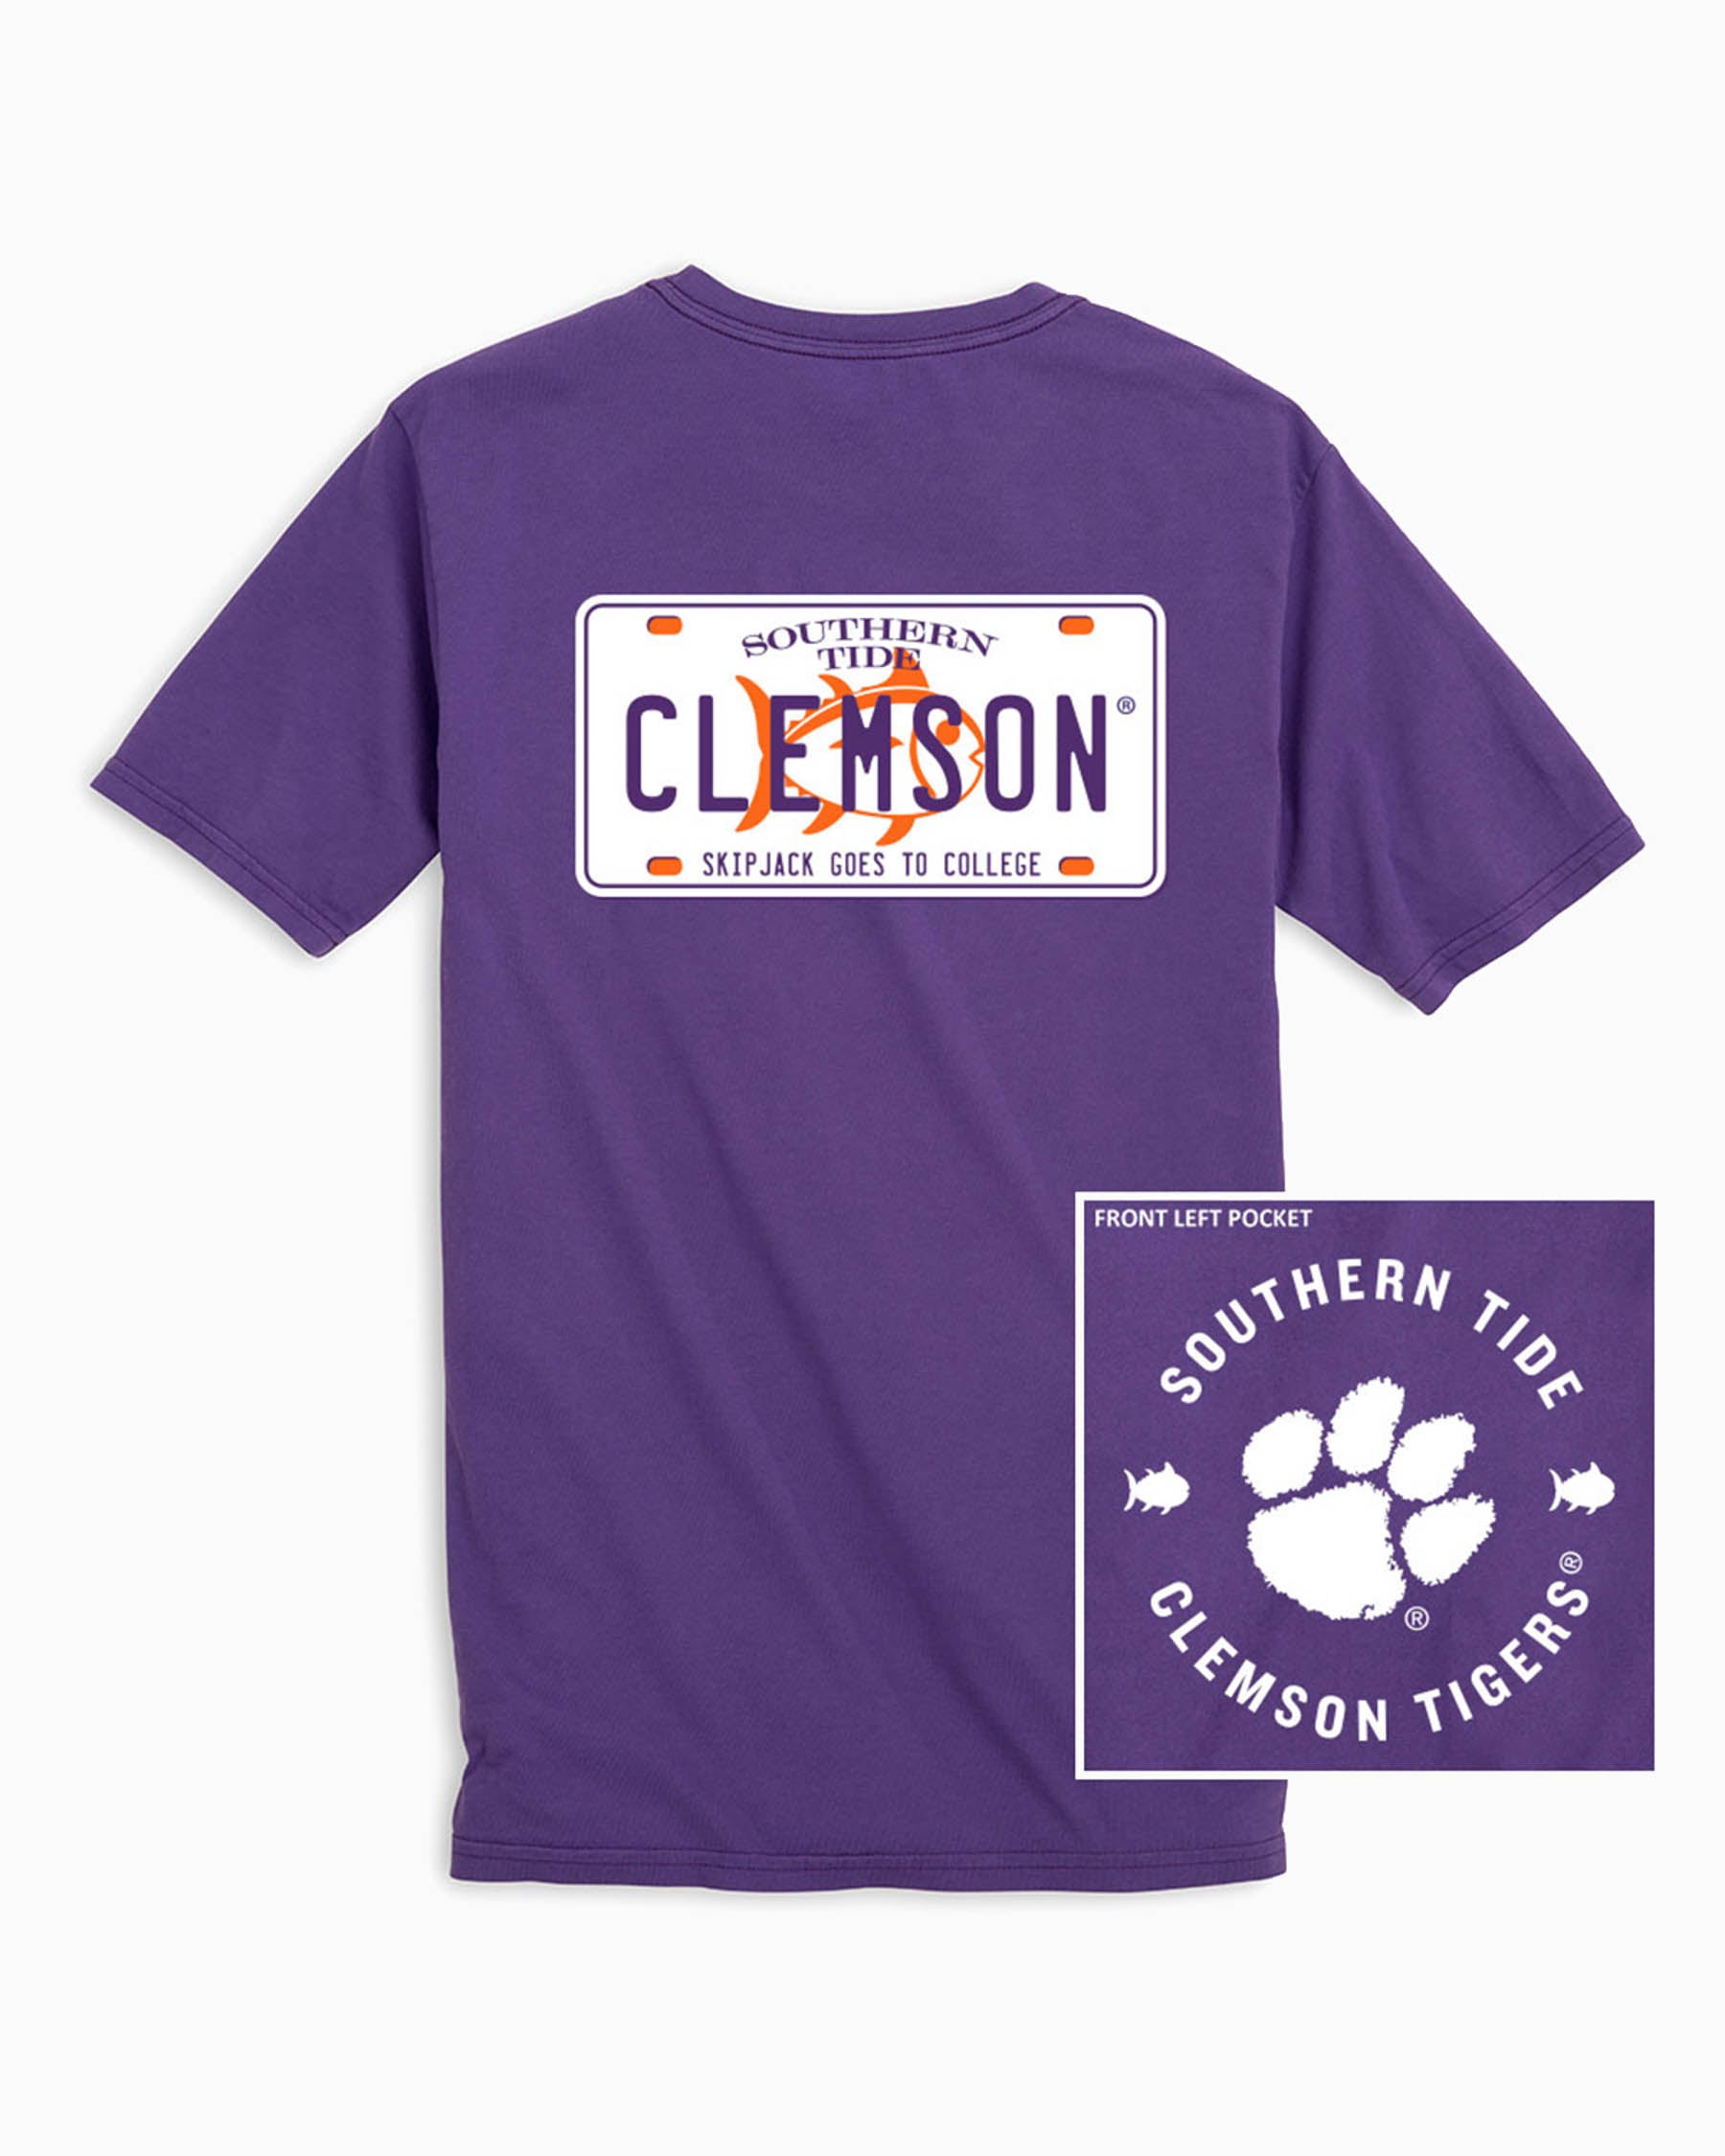 Clemson Tigers Purple Premium Pet Jersey